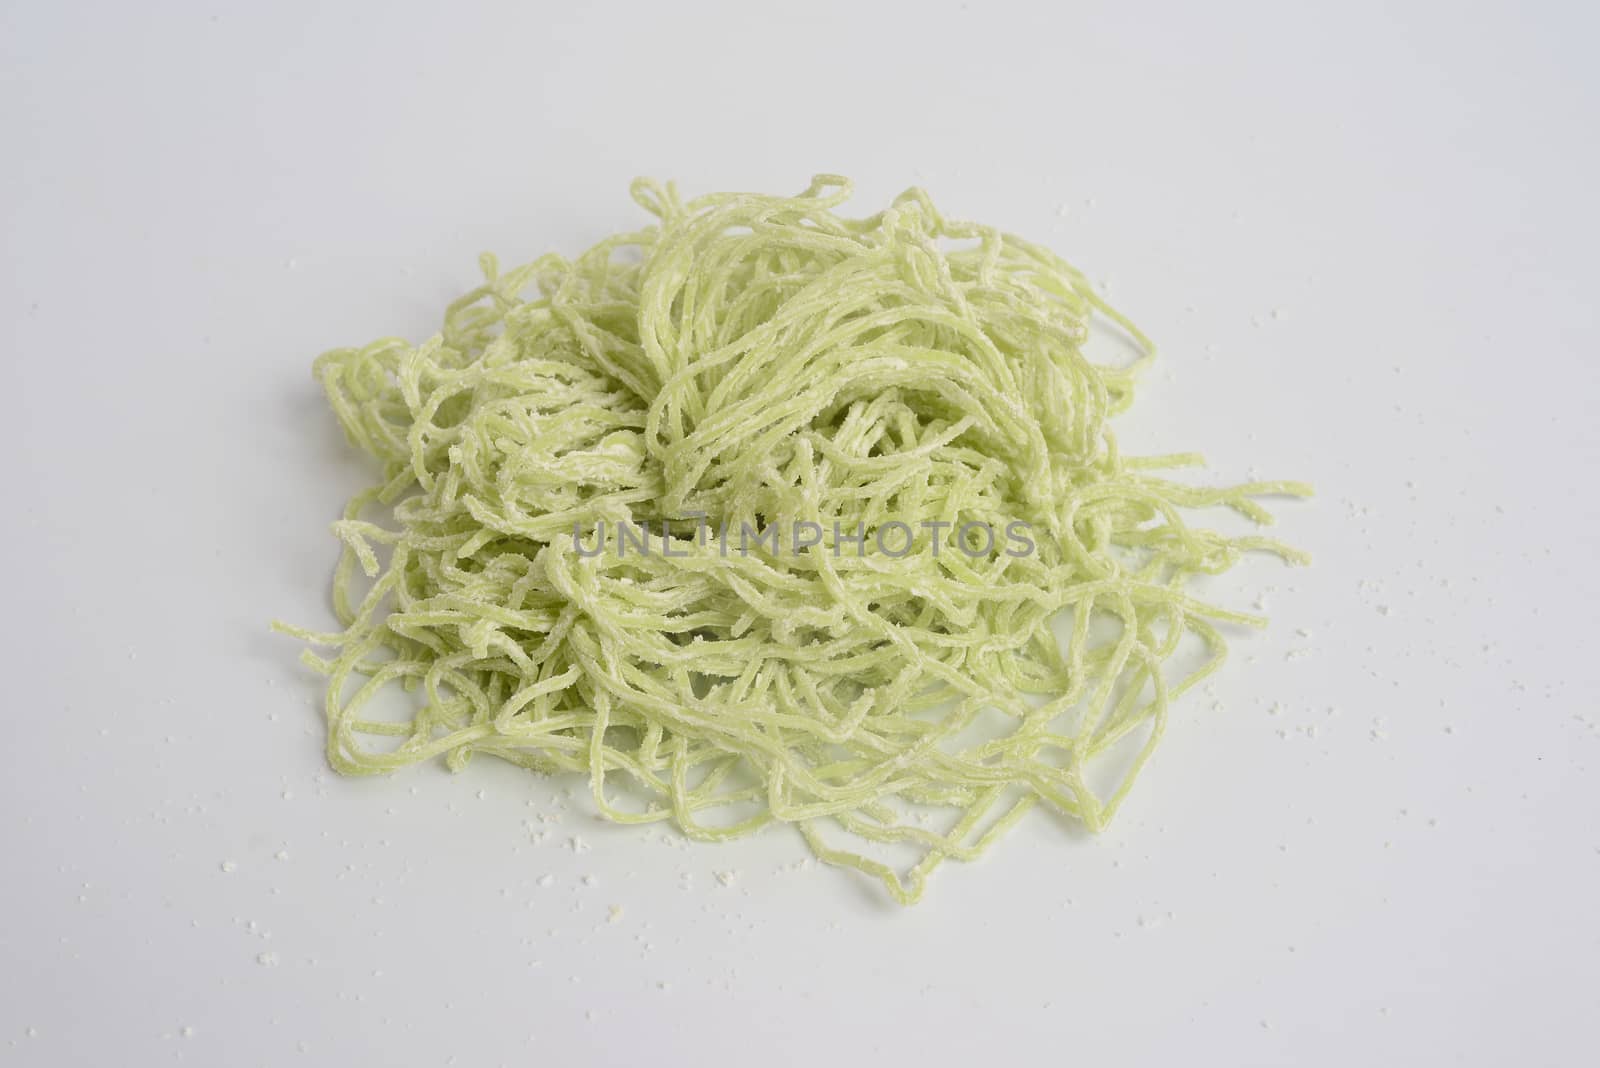 Jade noodle, vegetable noodles, green noodles on white background by ideation90